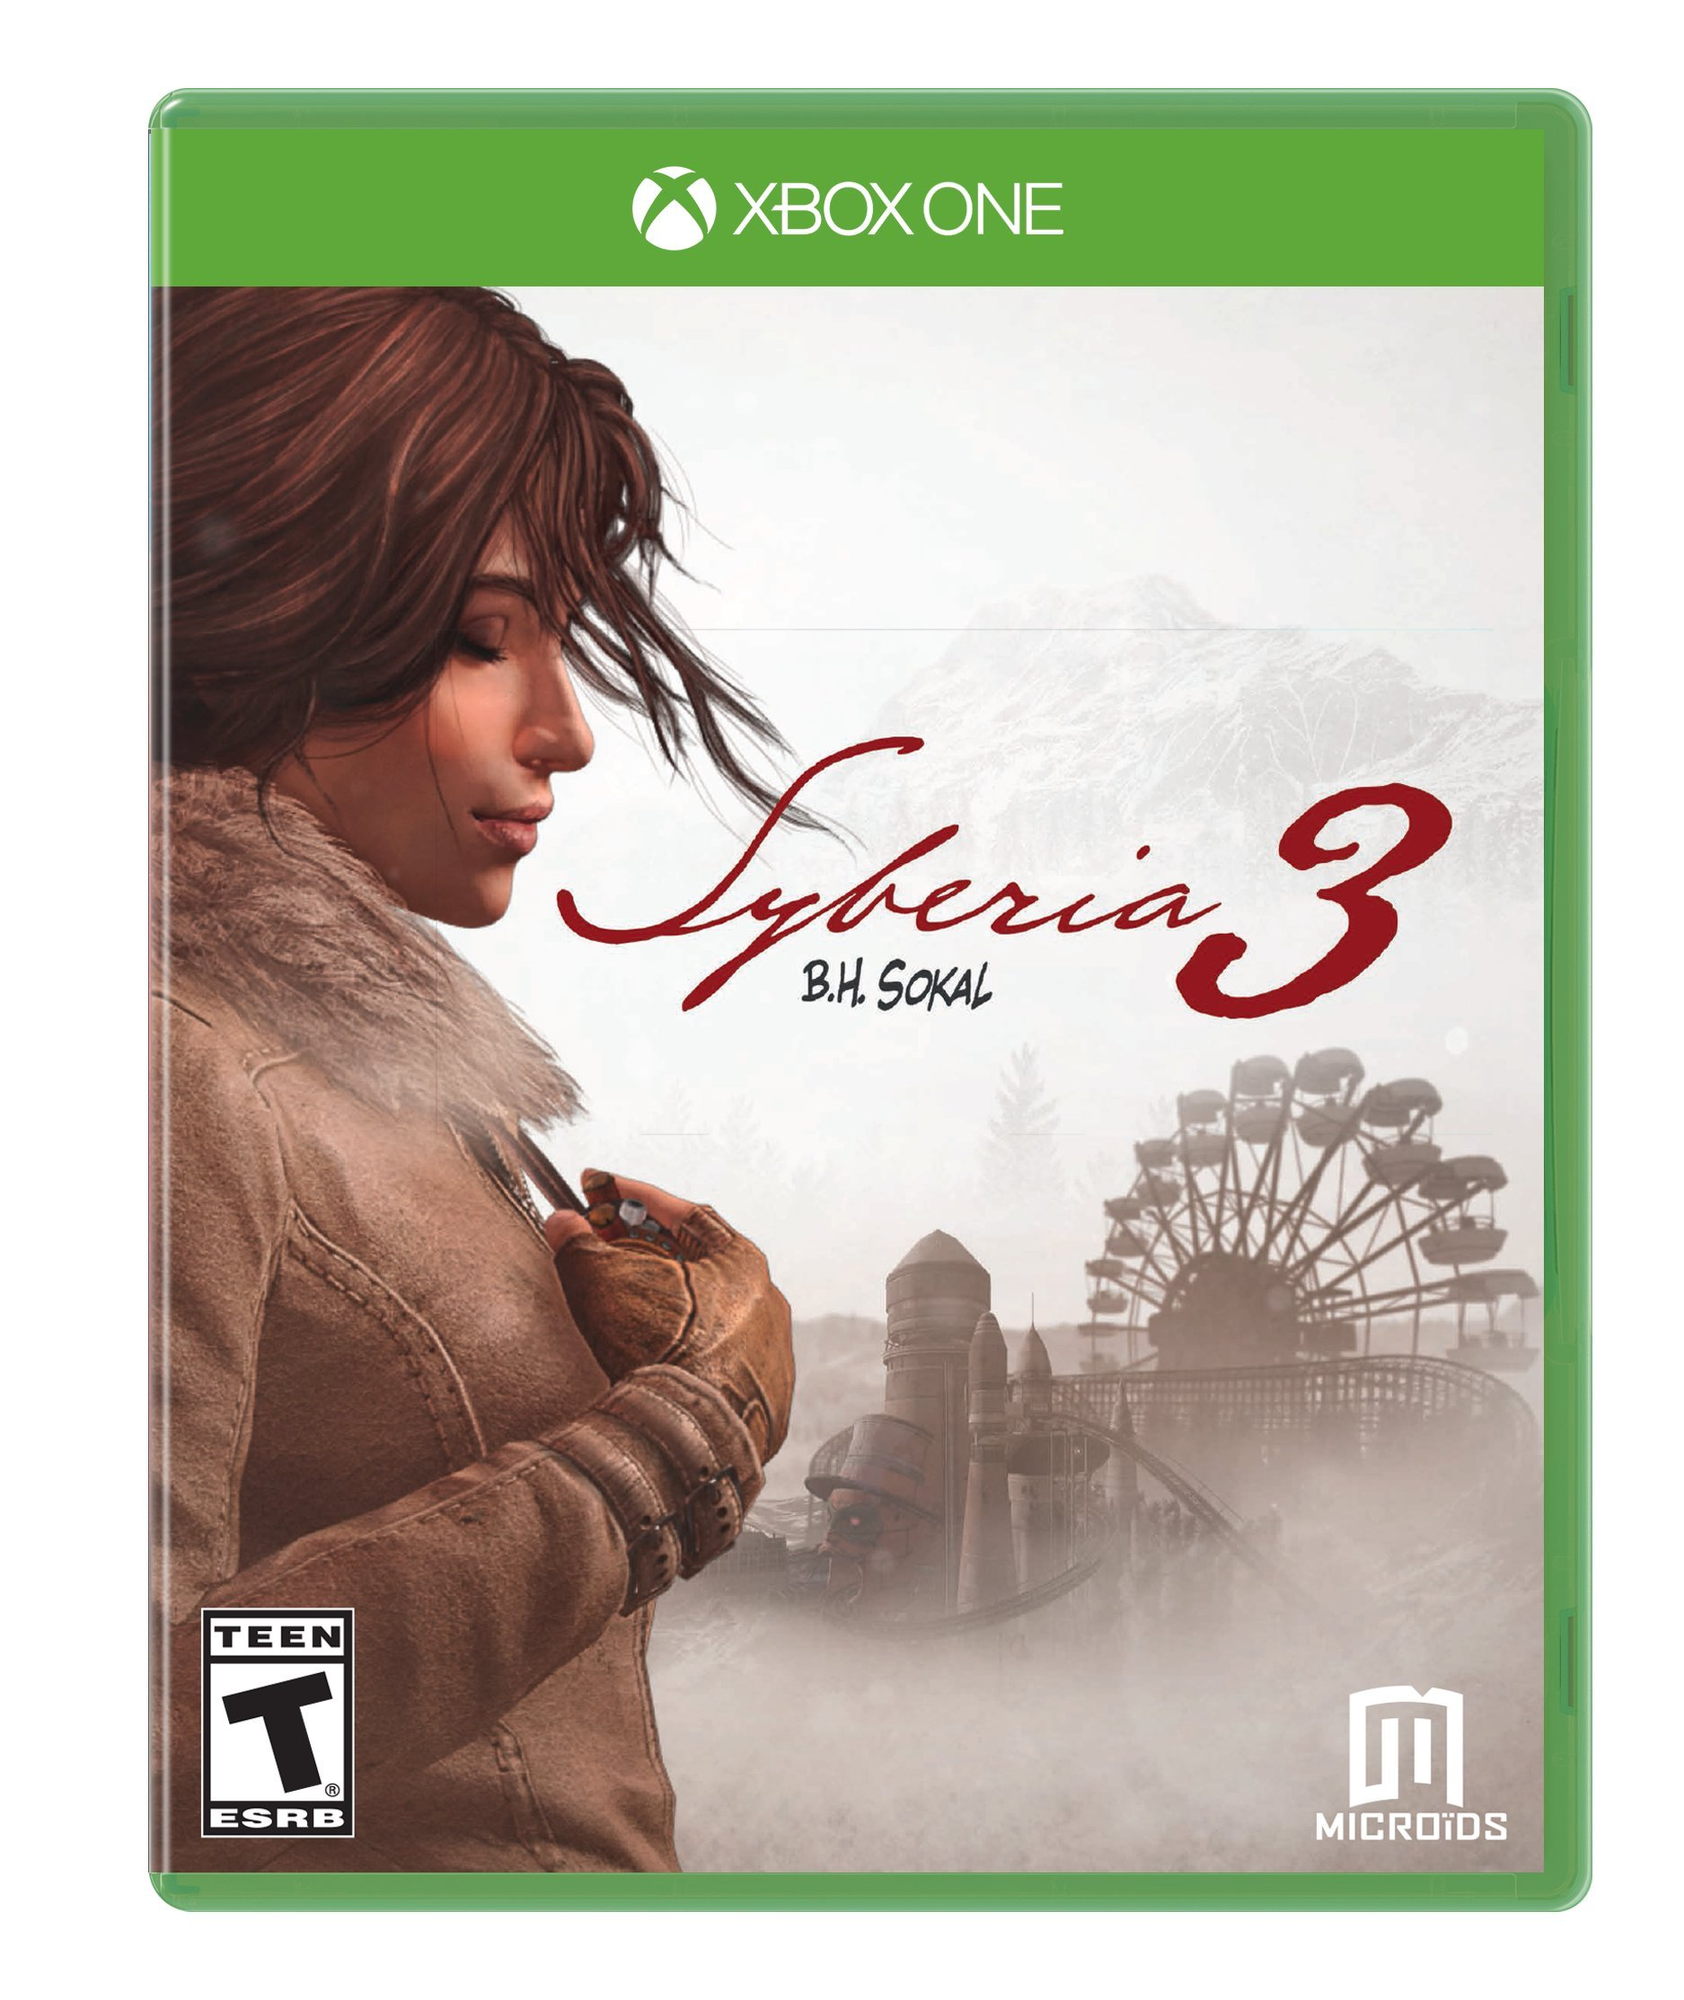 Игра Syberia 3, цифровой ключ для Xbox One/Series X|S, русский язык, Аргентина